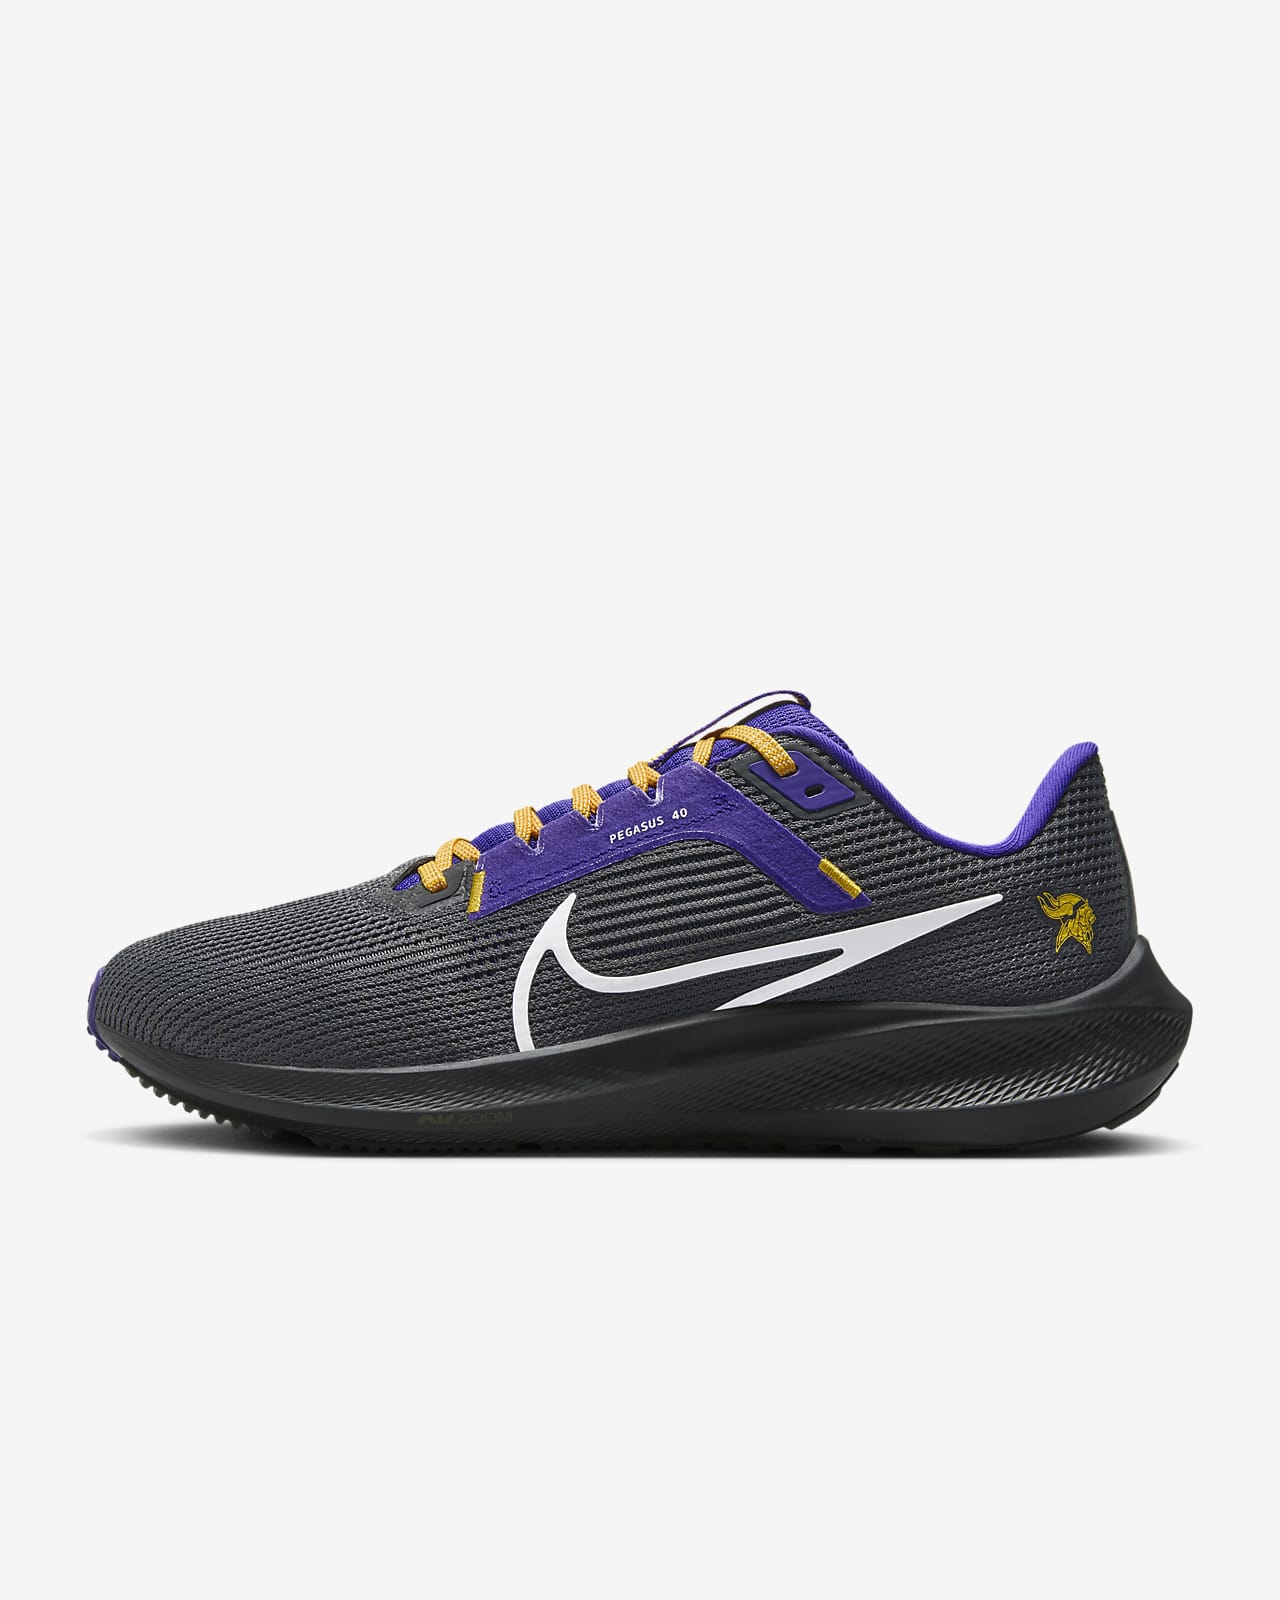 Nike Pegasus 40 (NFL Minnesota Vikings) Men's Road Running Shoes